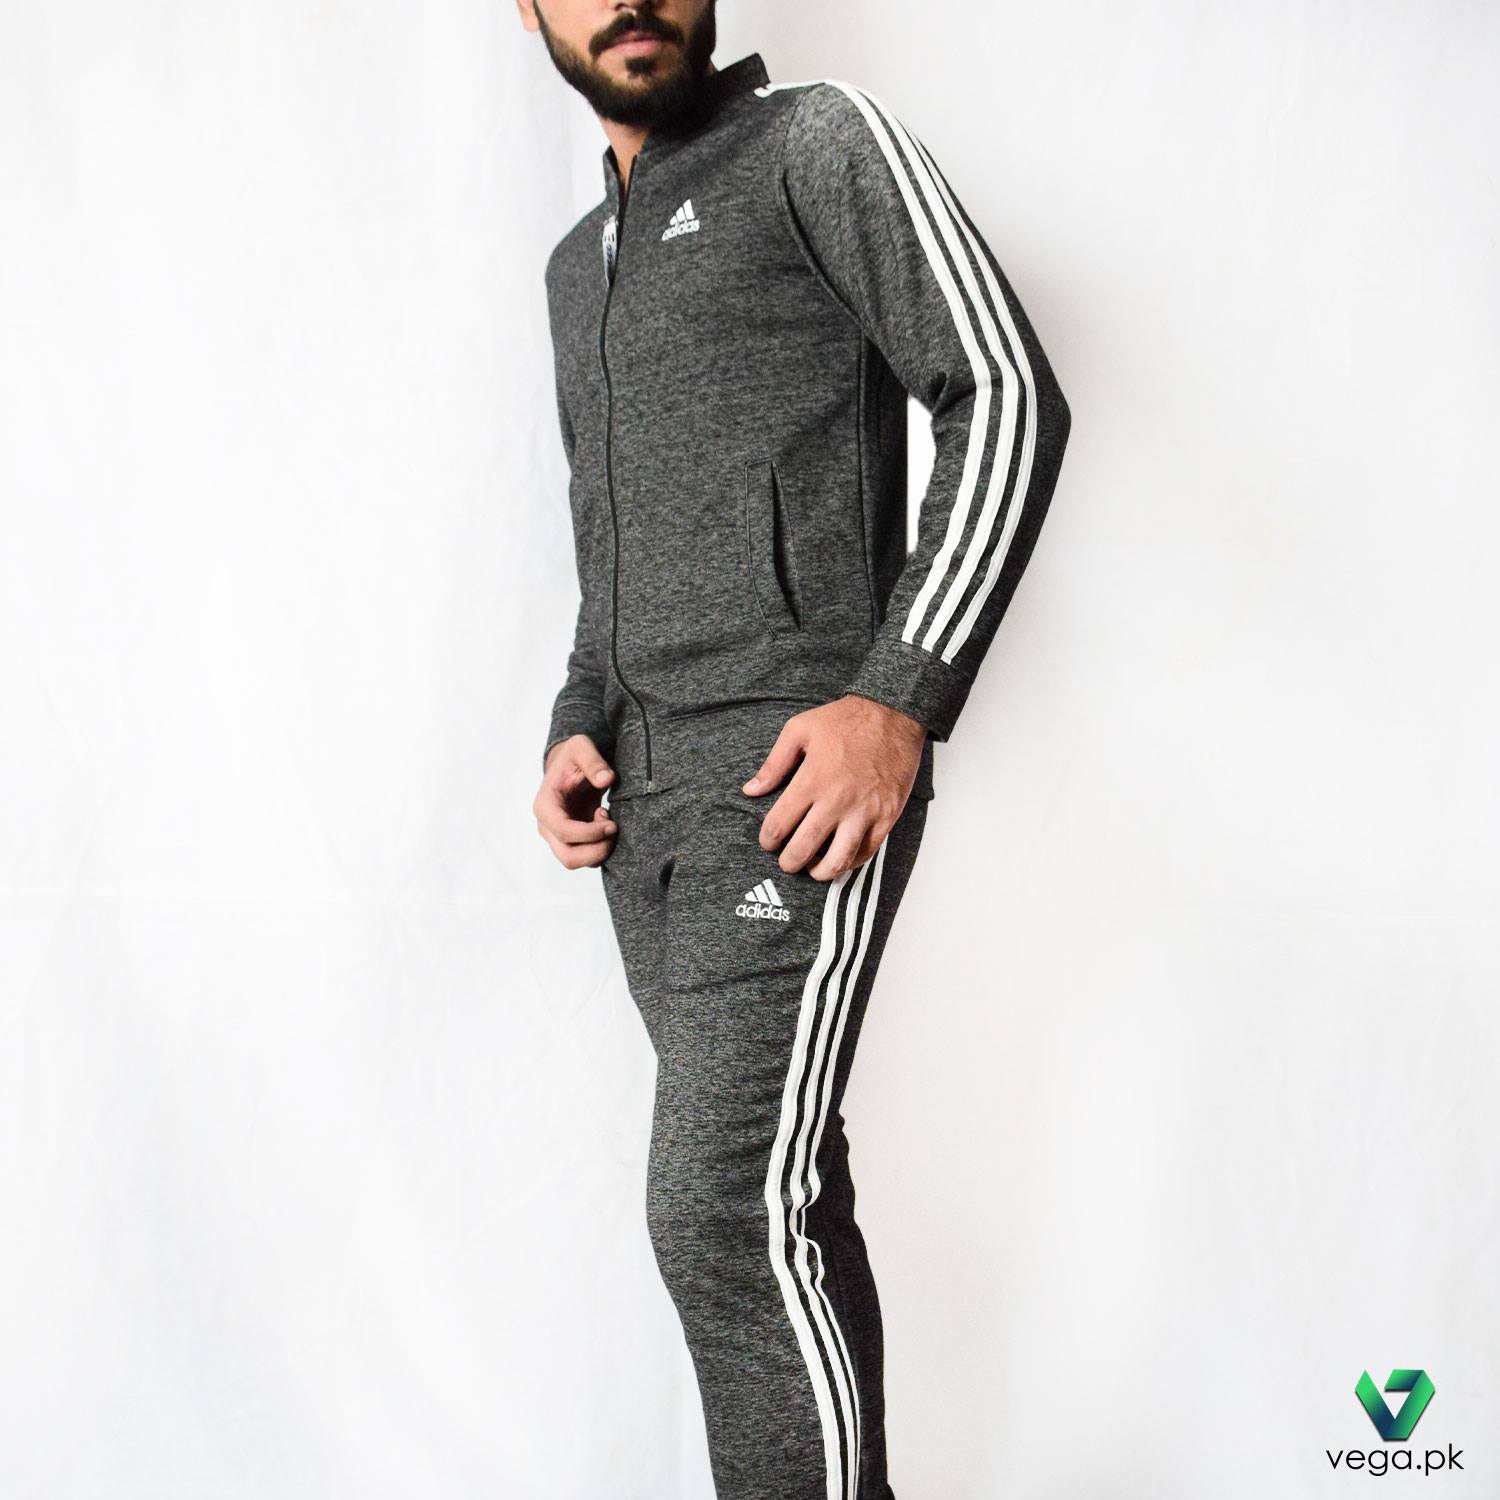 Adidas Classic 3-Stripes – VEGA.pk